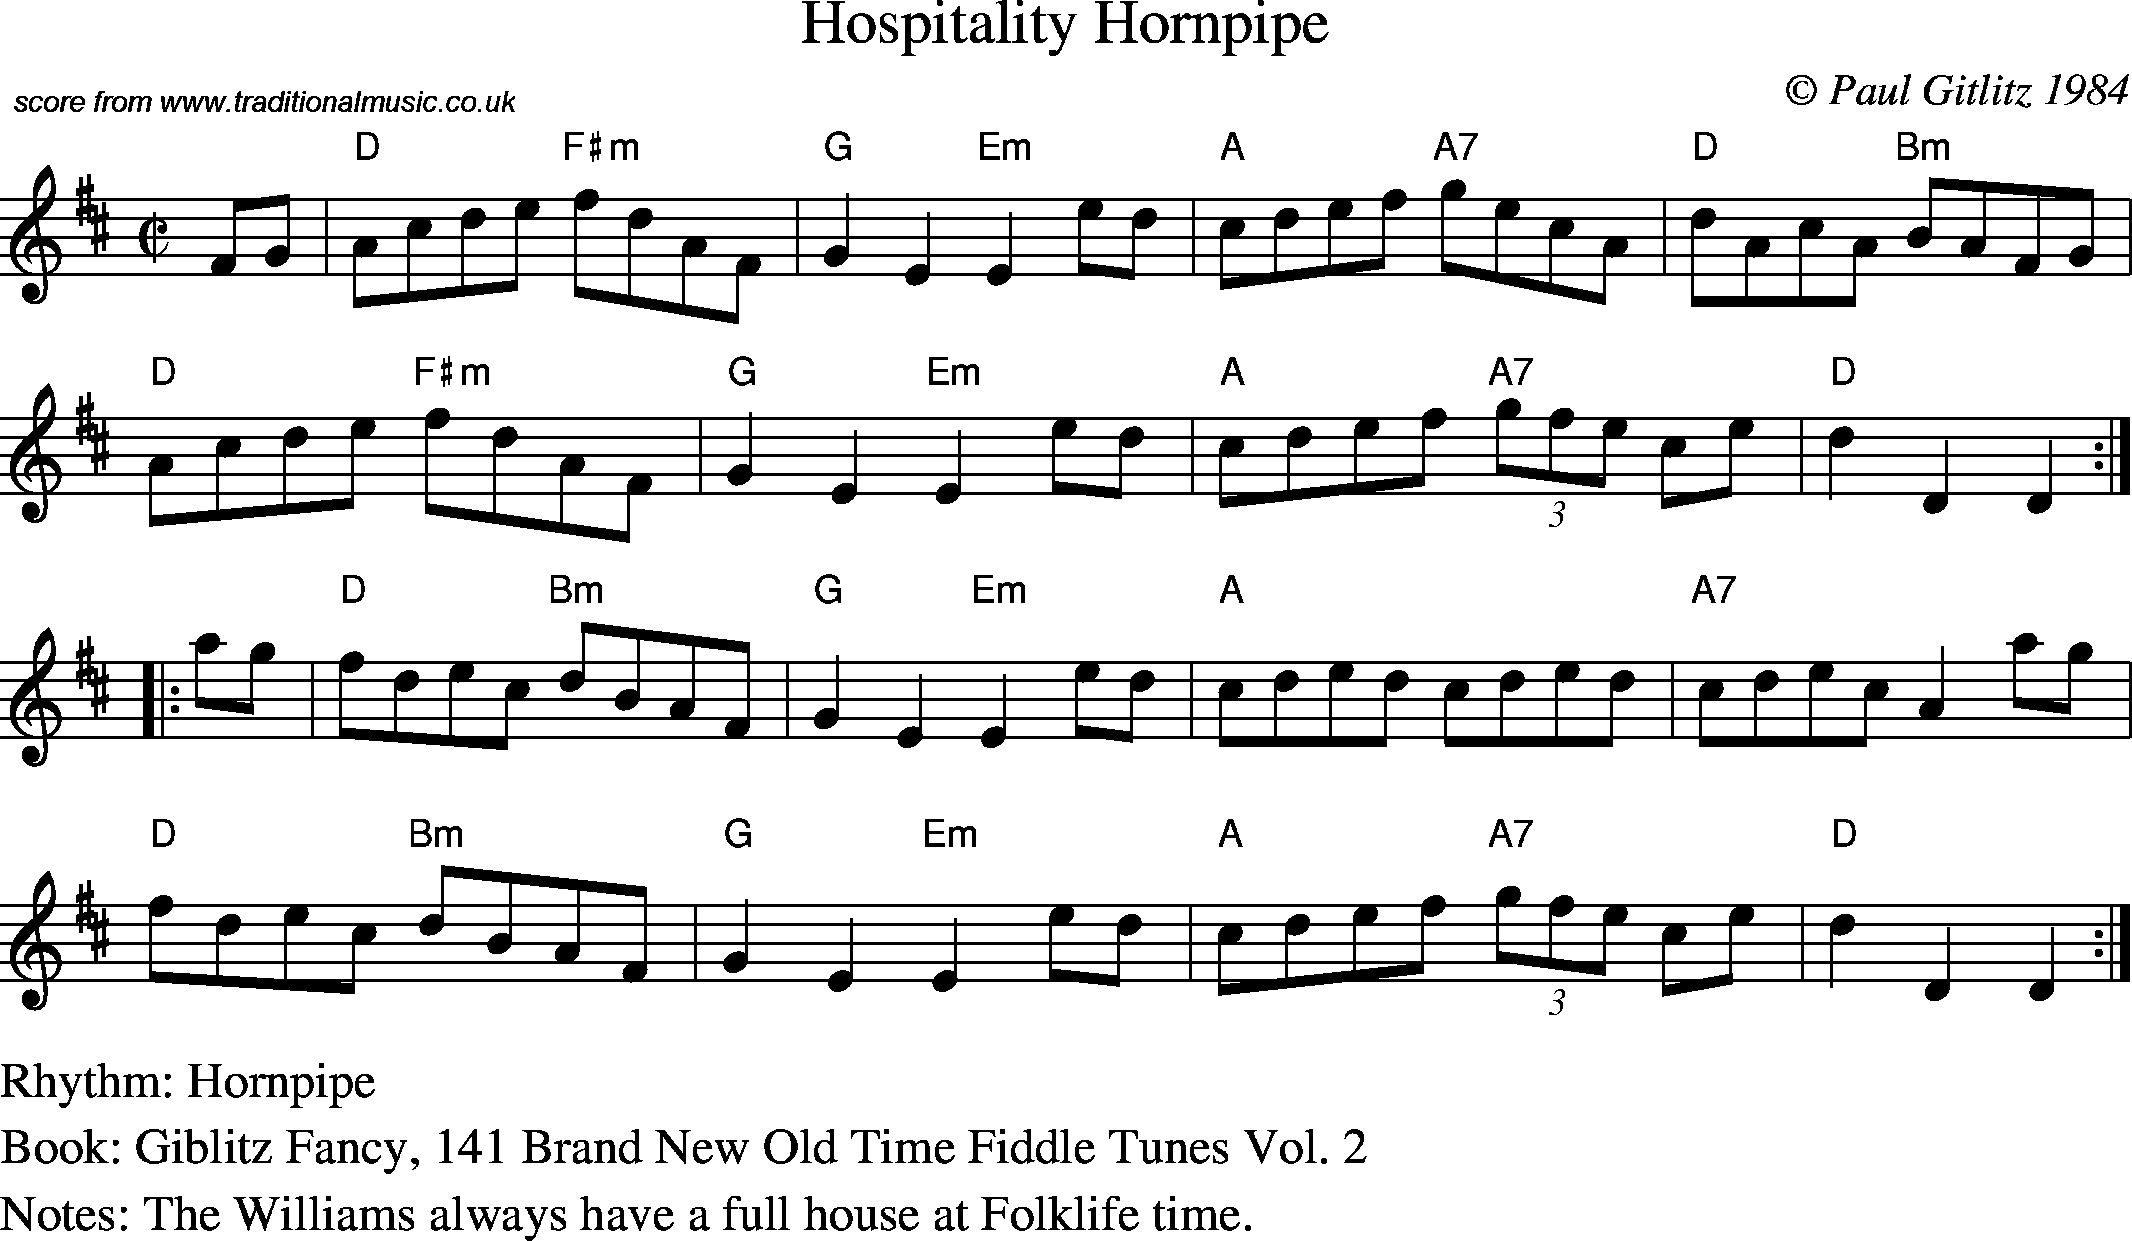 Sheet Music Score for Hornpipe/Strathspey - Hospitality Hornpipe